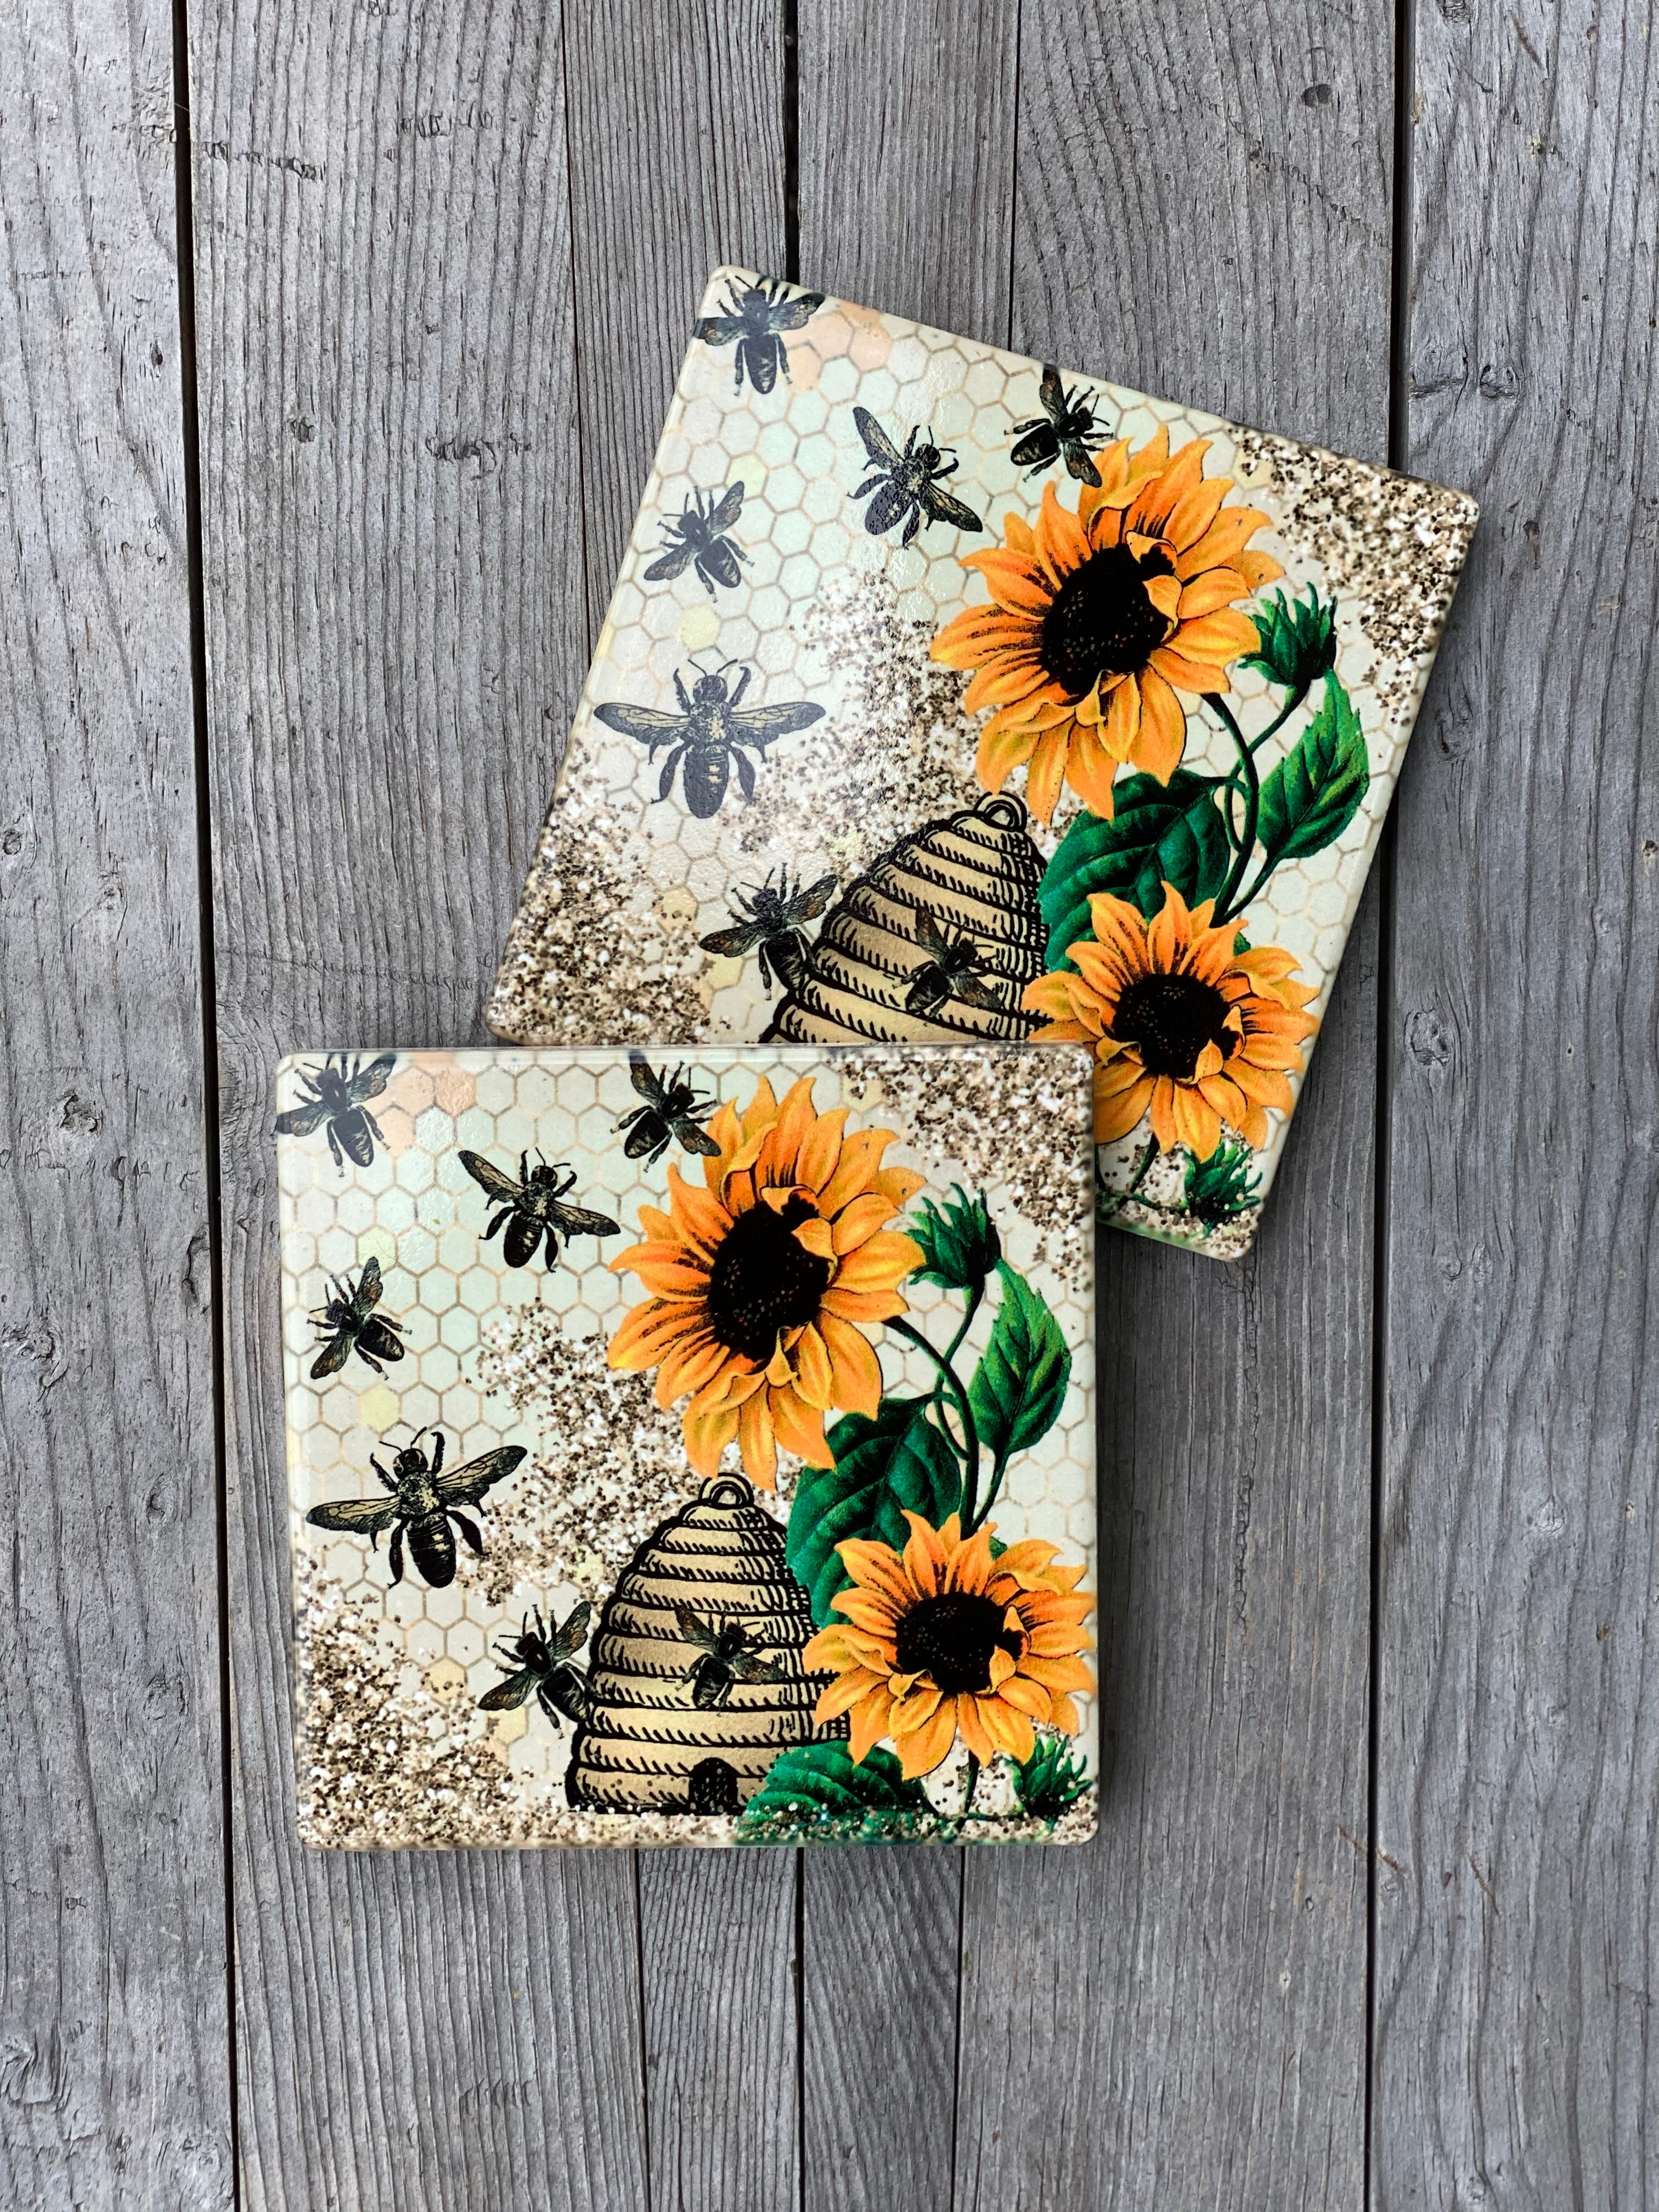 Sunflowers and Honey Bees Ceramic Coasters, Sublimation Coaster Set of 2 USA